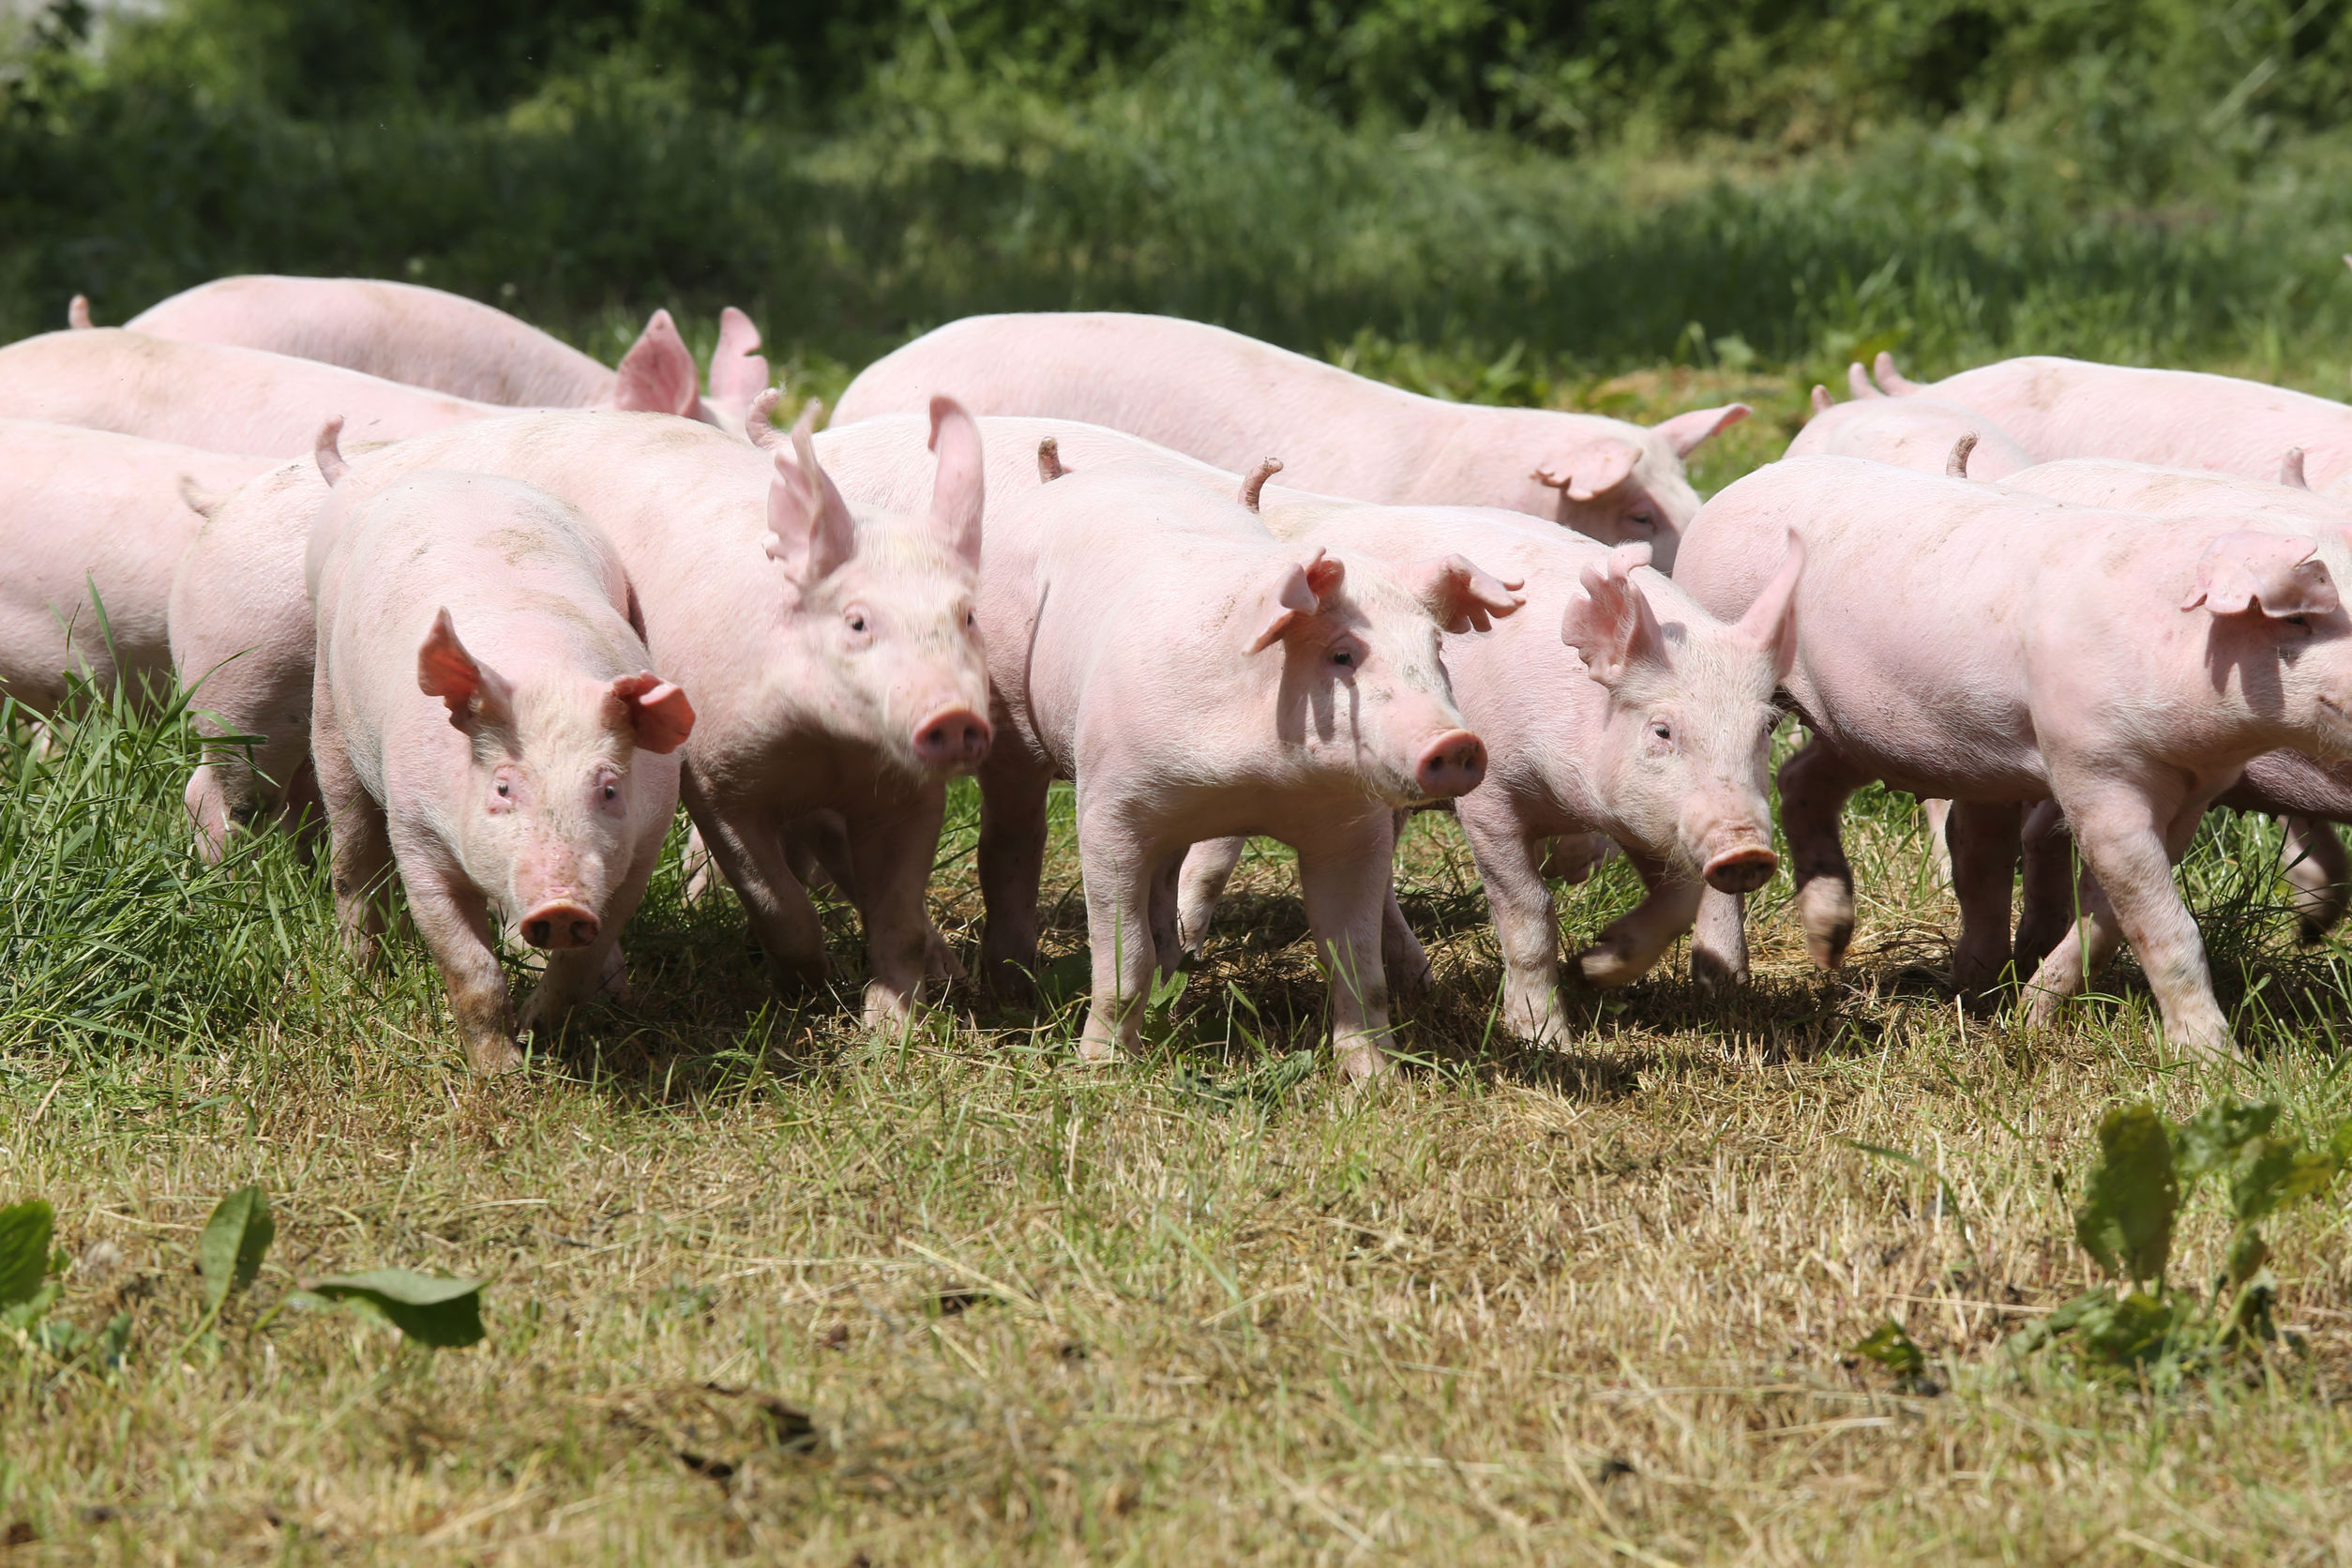 Herd of piglets on animal farm